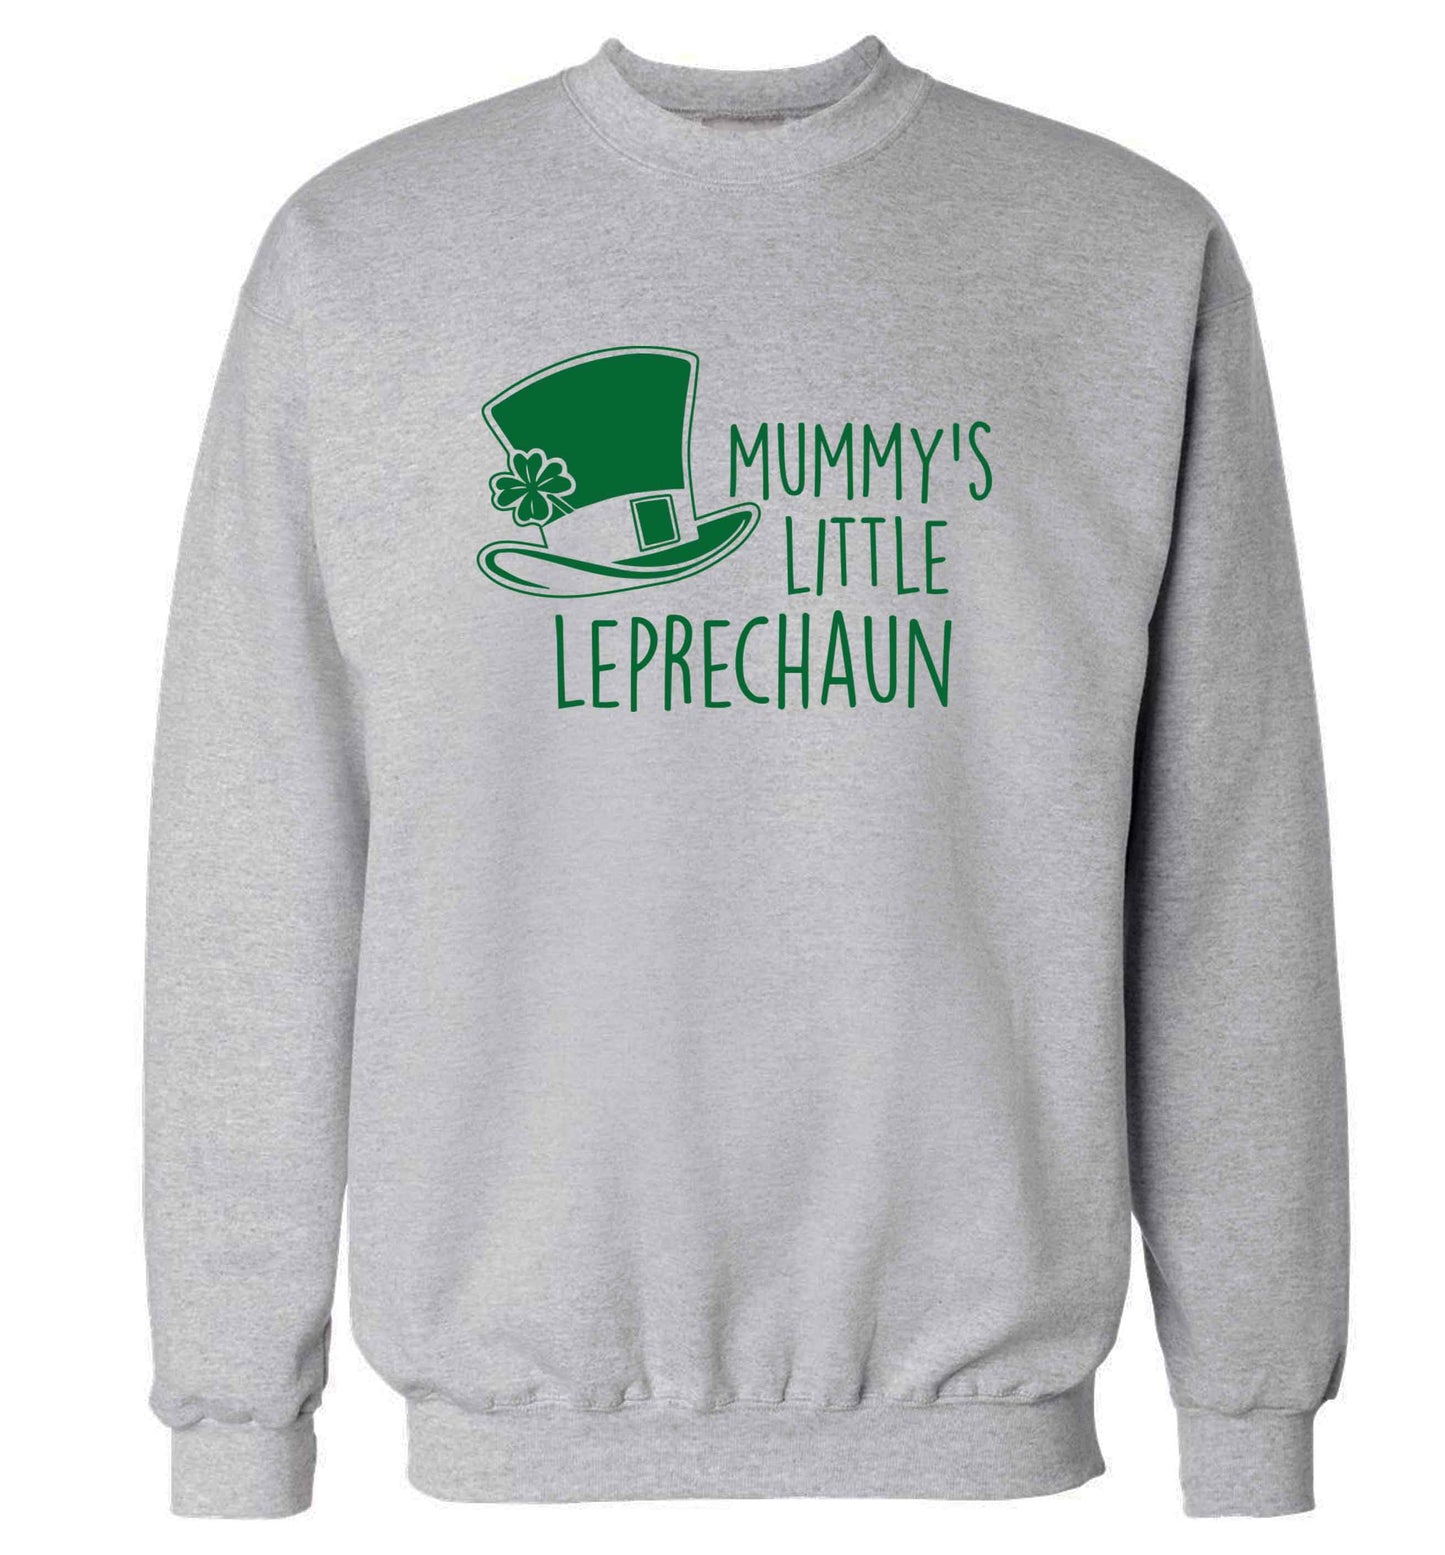 Mummy's little leprechaun adult's unisex grey sweater 2XL